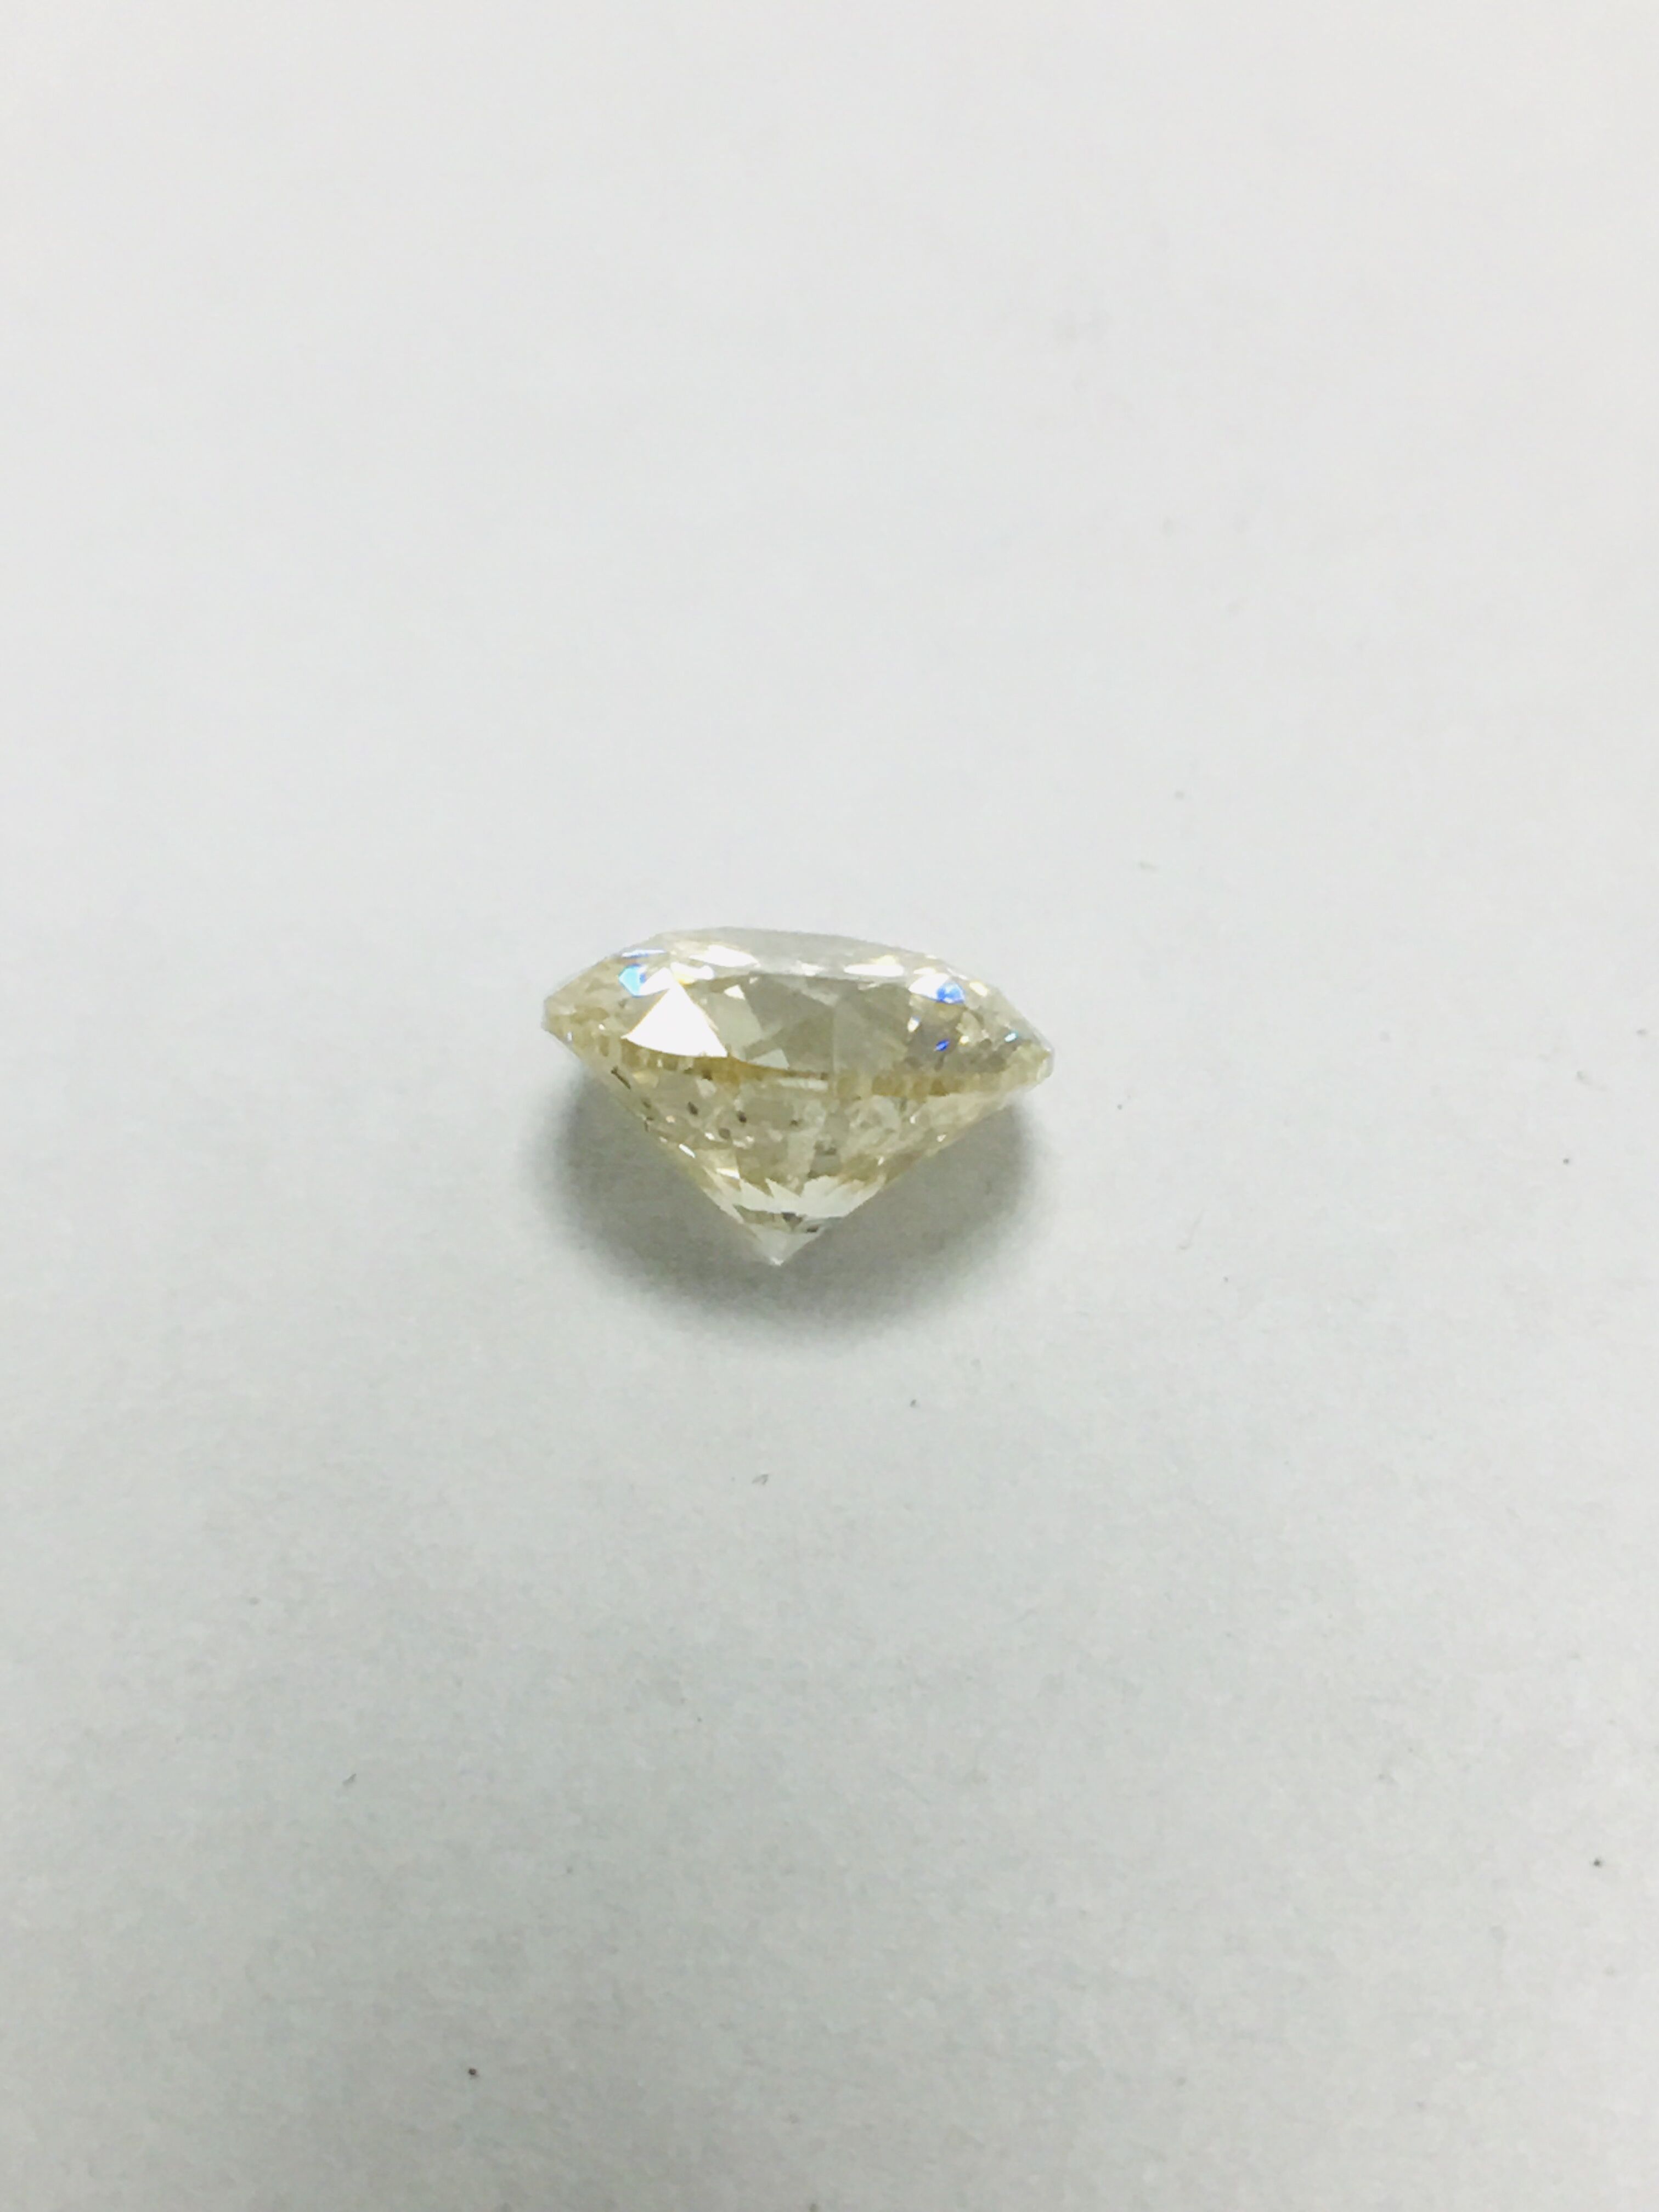 1.55ct Natural Brilliant cut DiamondSI2 clarity - Image 16 of 35